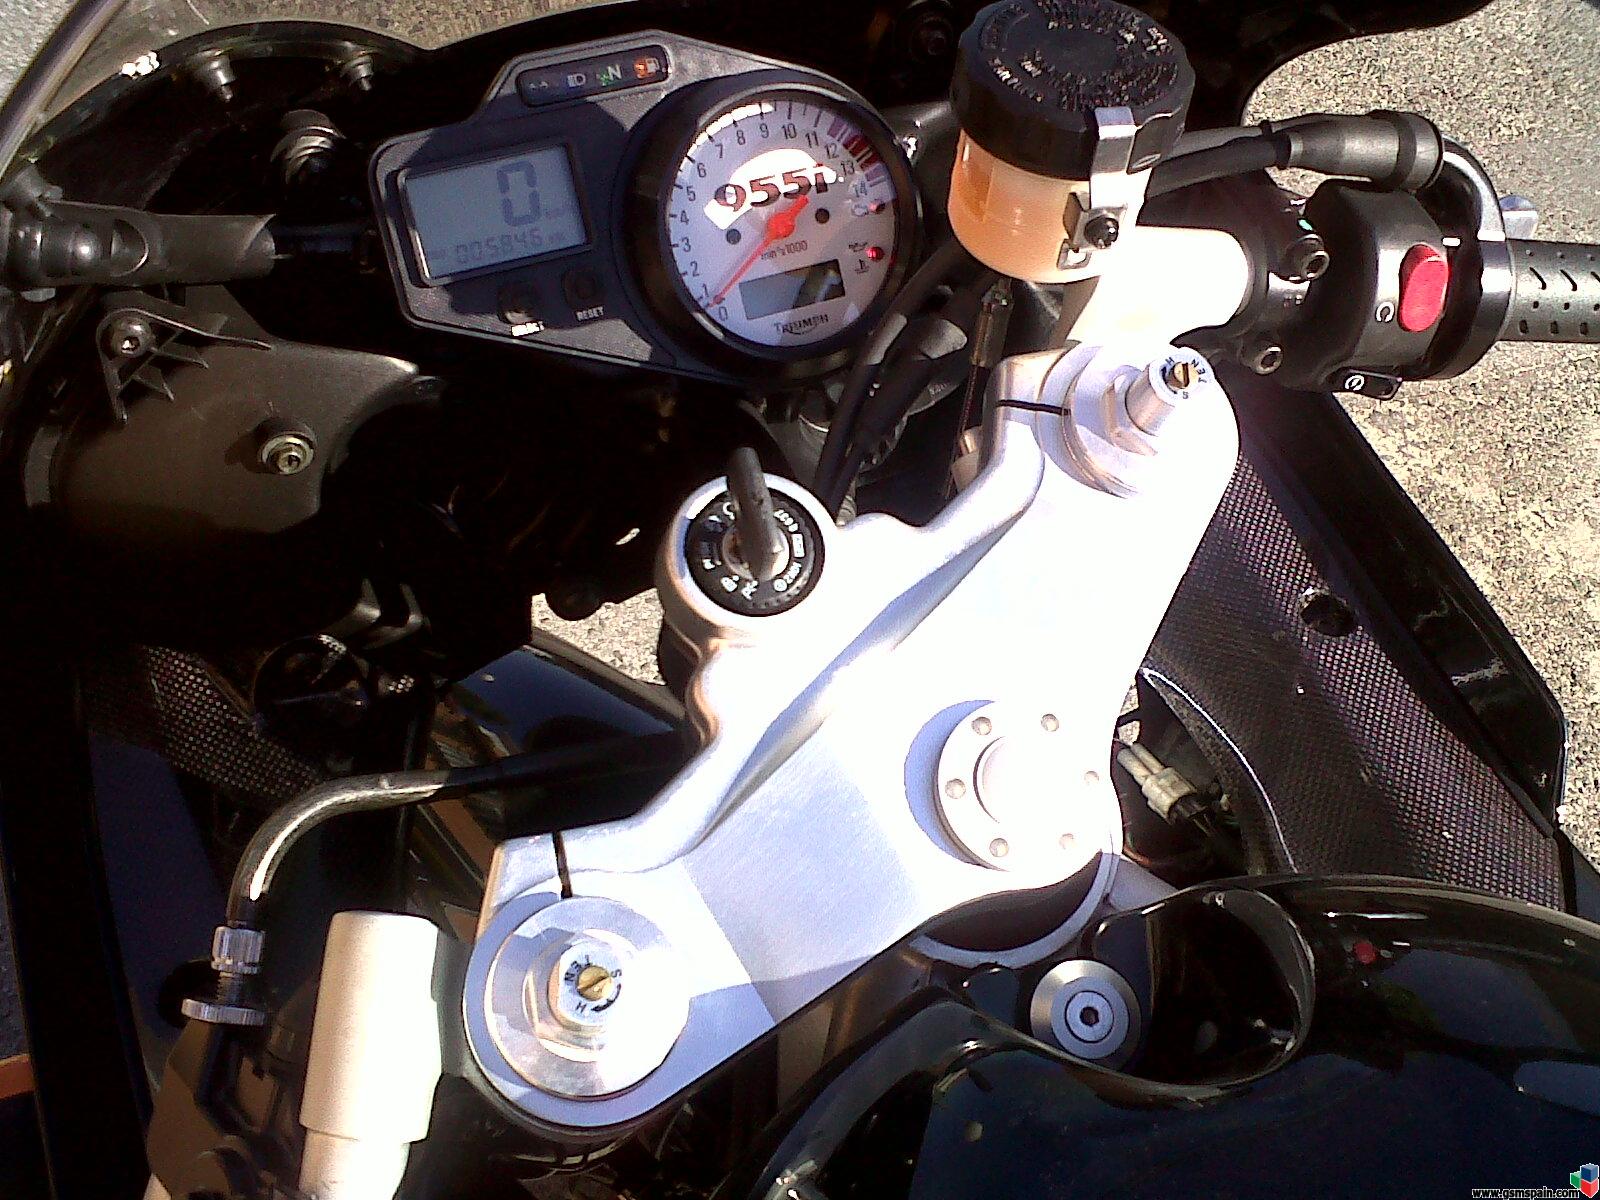 [COMPRO] Vendo moto Triumph Daytona Centennial Edition 5000km